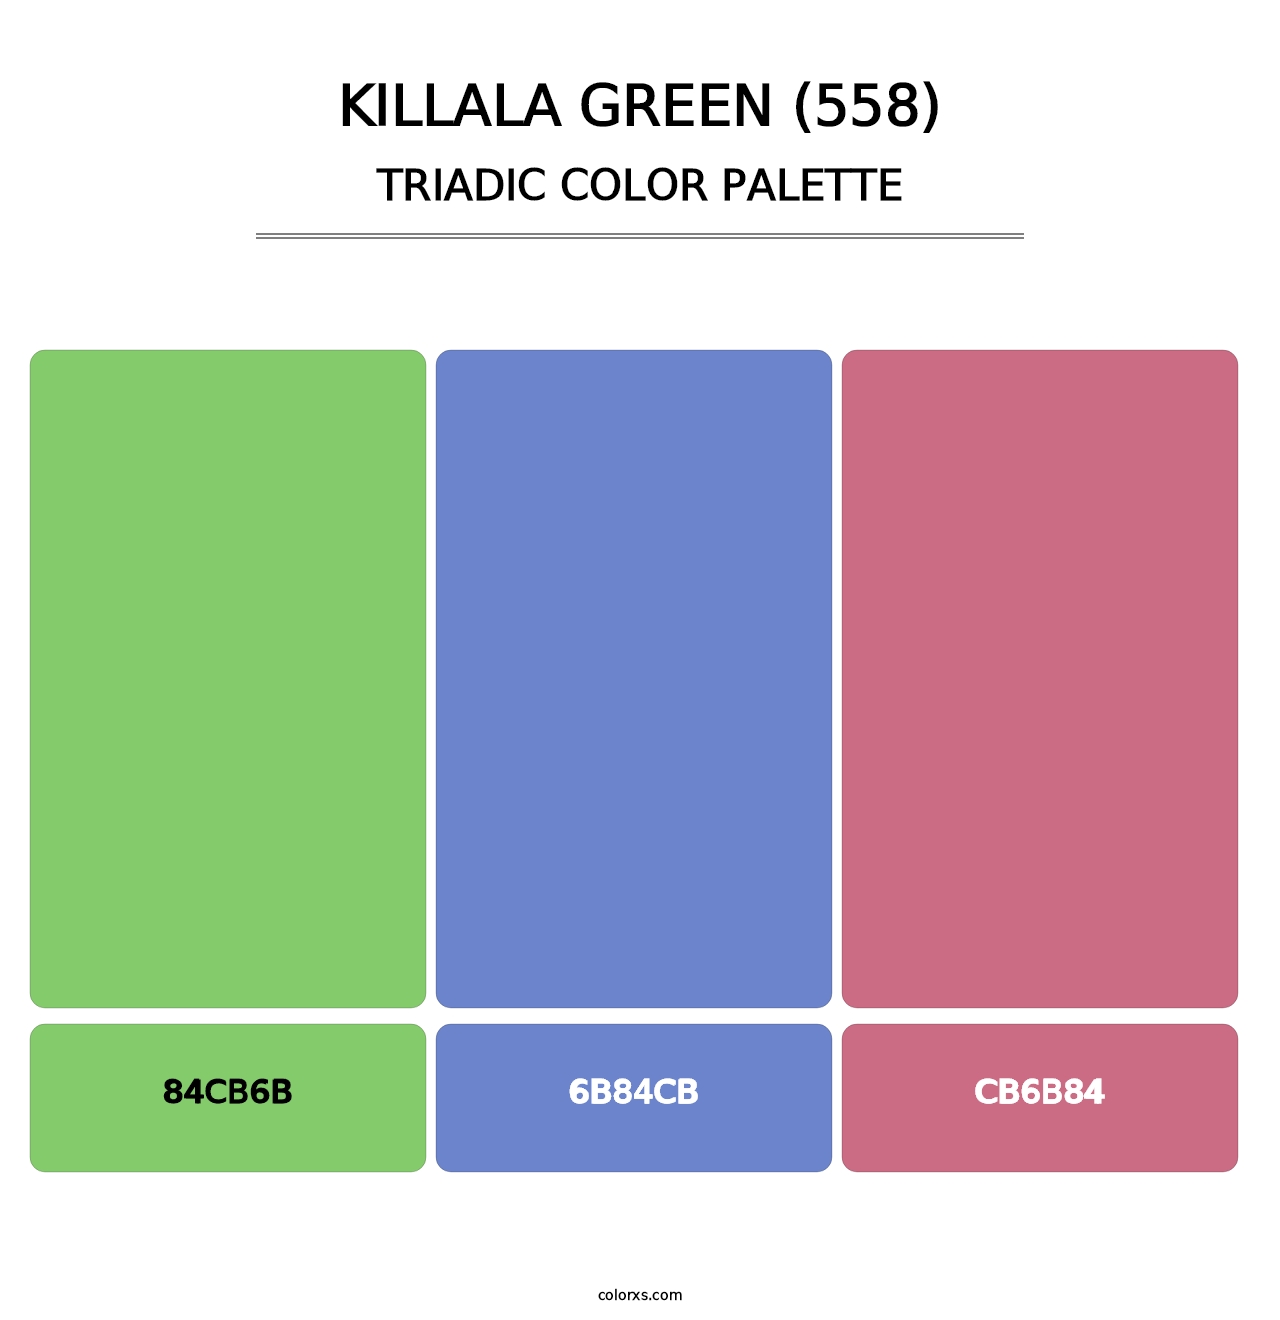 Killala Green (558) - Triadic Color Palette